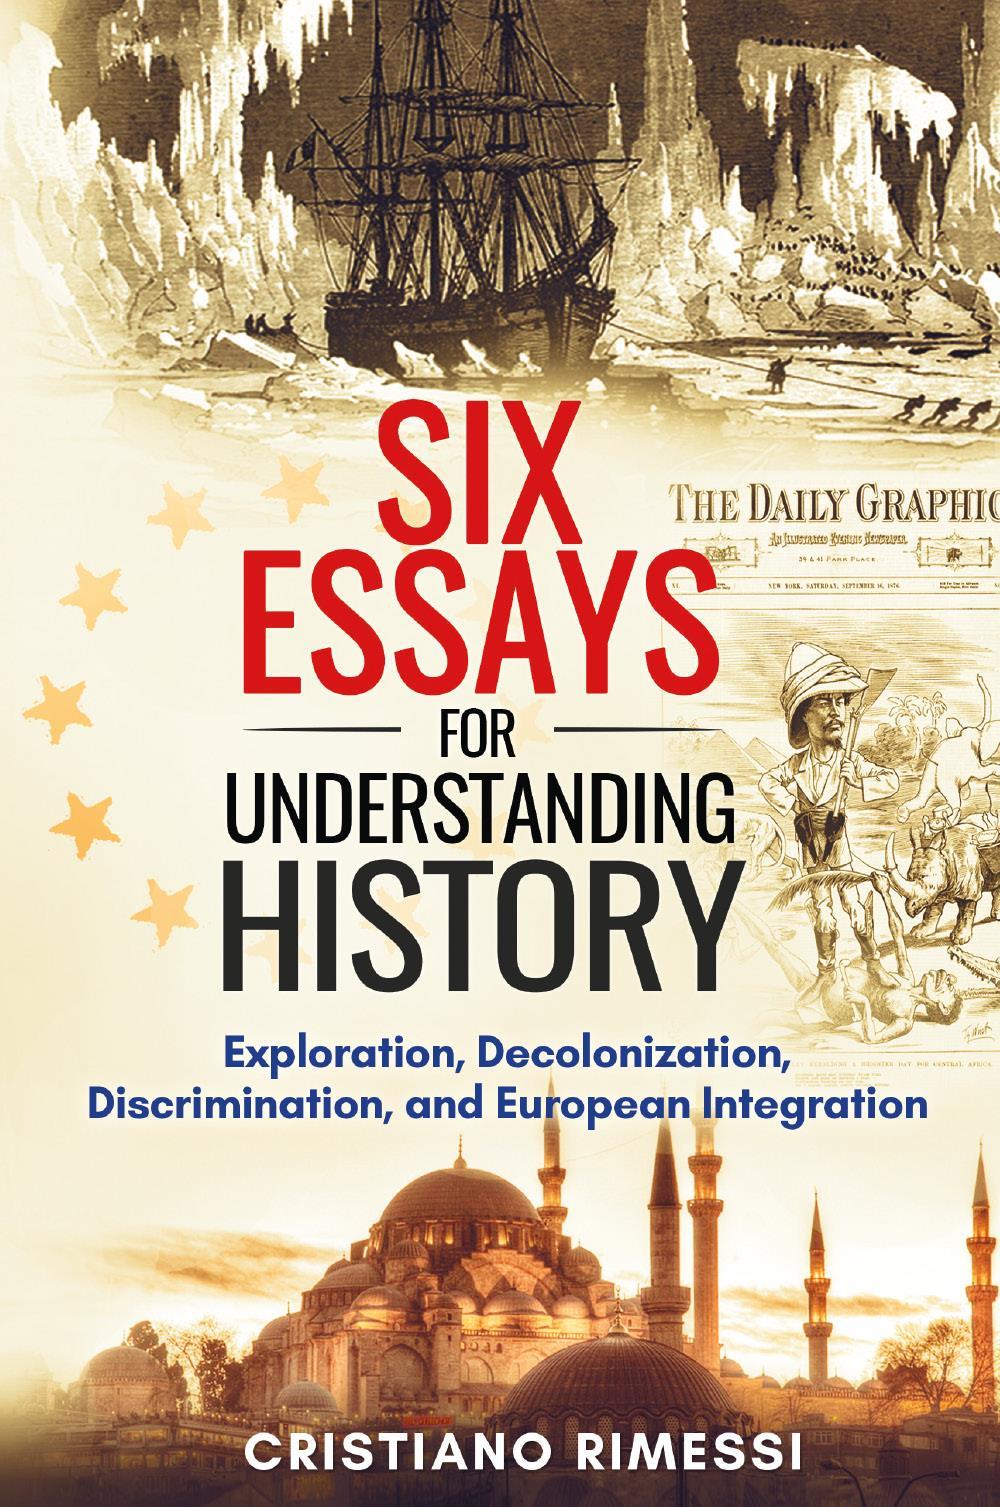 Six Short essays for understanding history